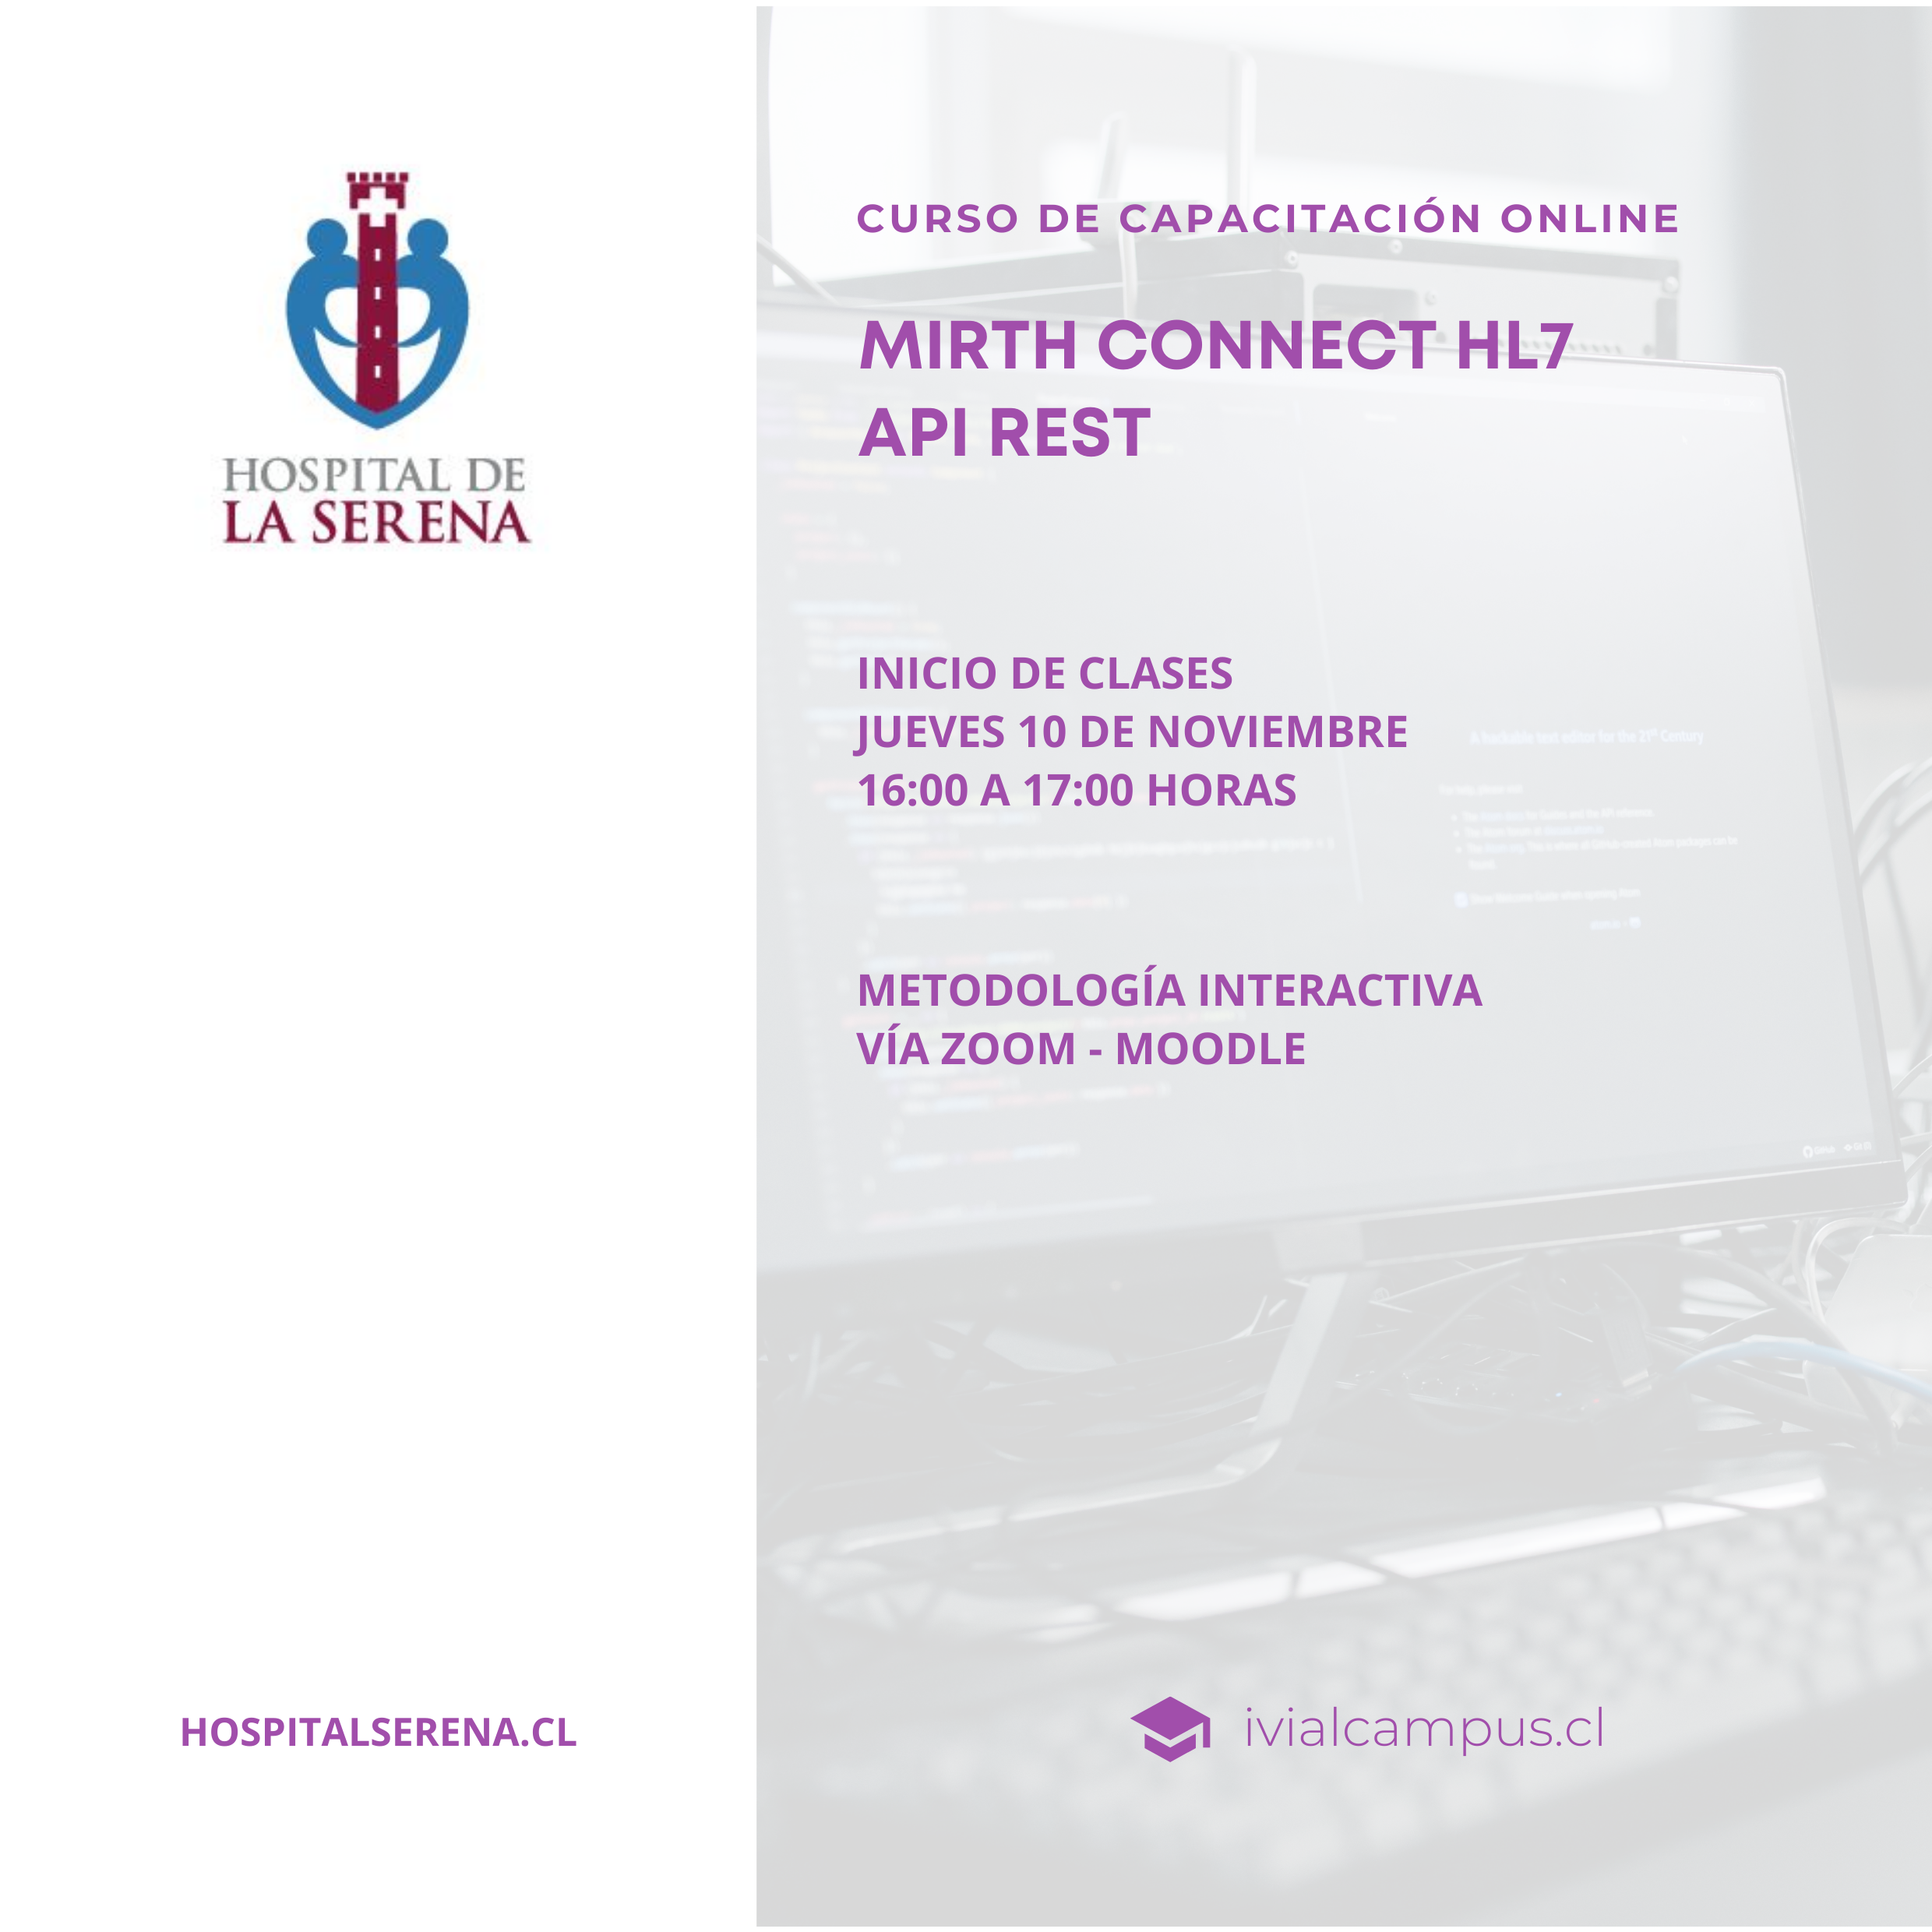 HOSPITAL DE LA SERENA: Mirth Connect HL7 y API Rest